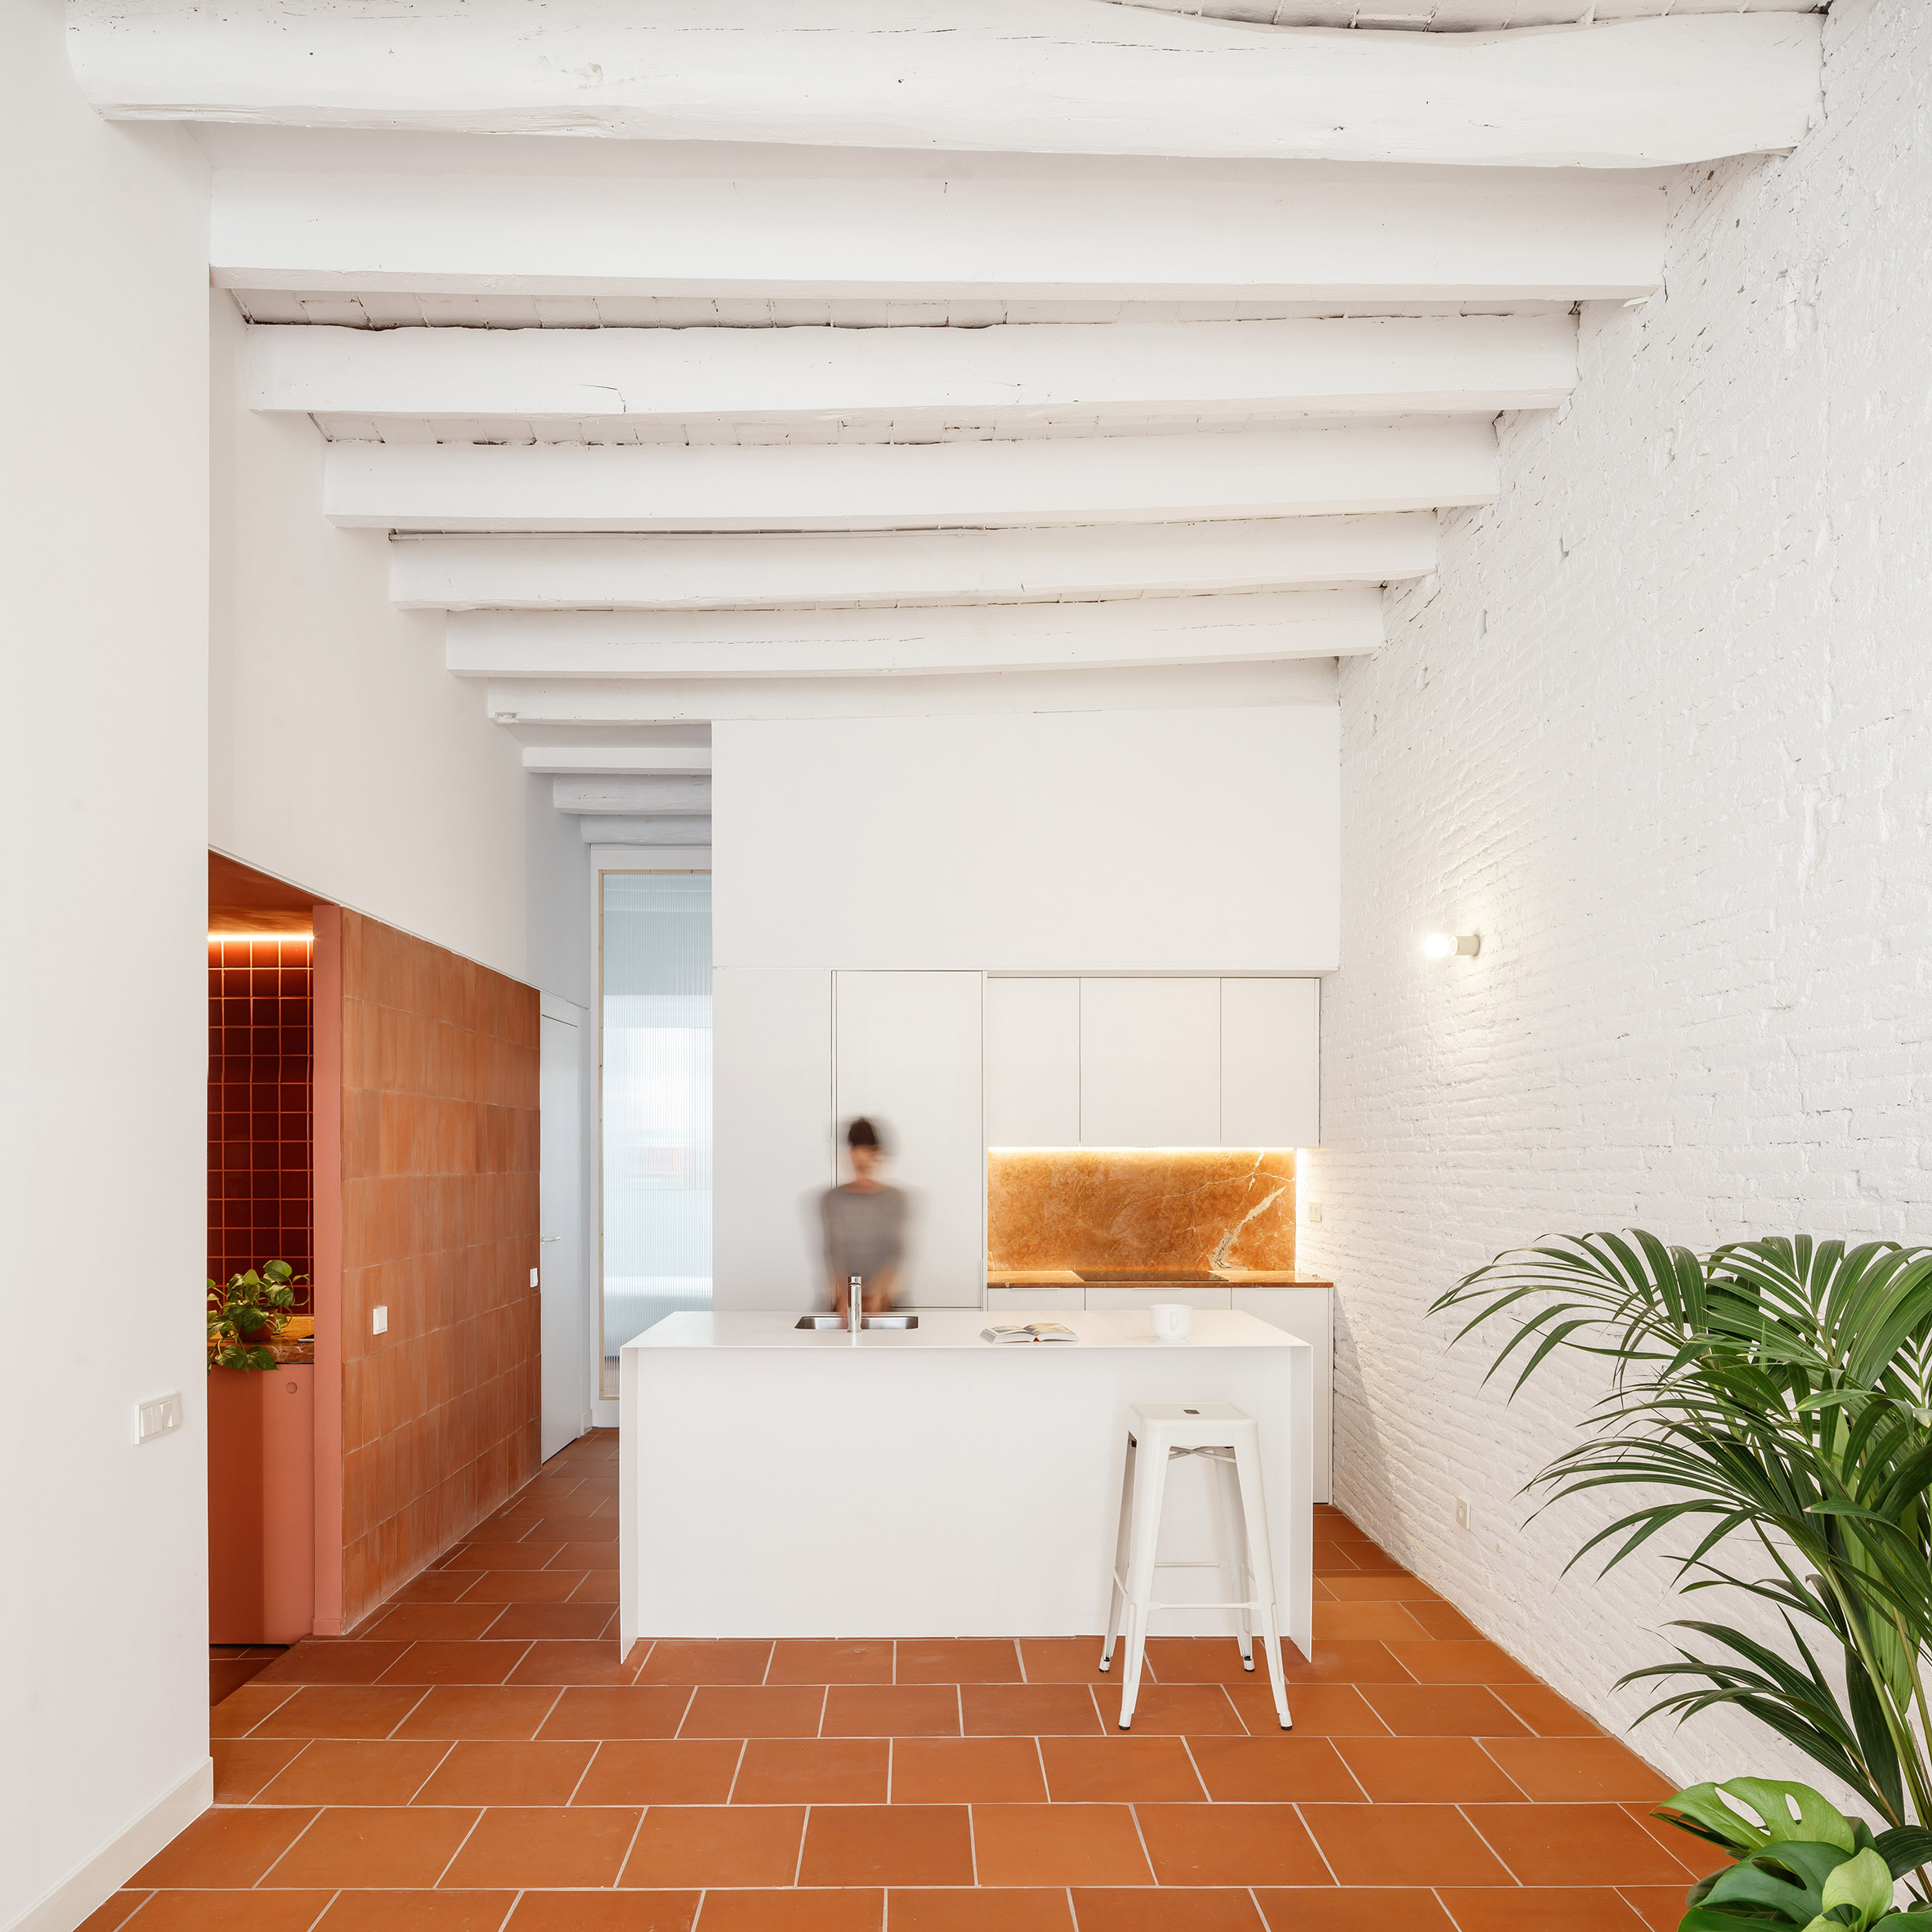 Terracotta Textures In Barcelona Apartment, Terracotta Floor Tiles Interior Design